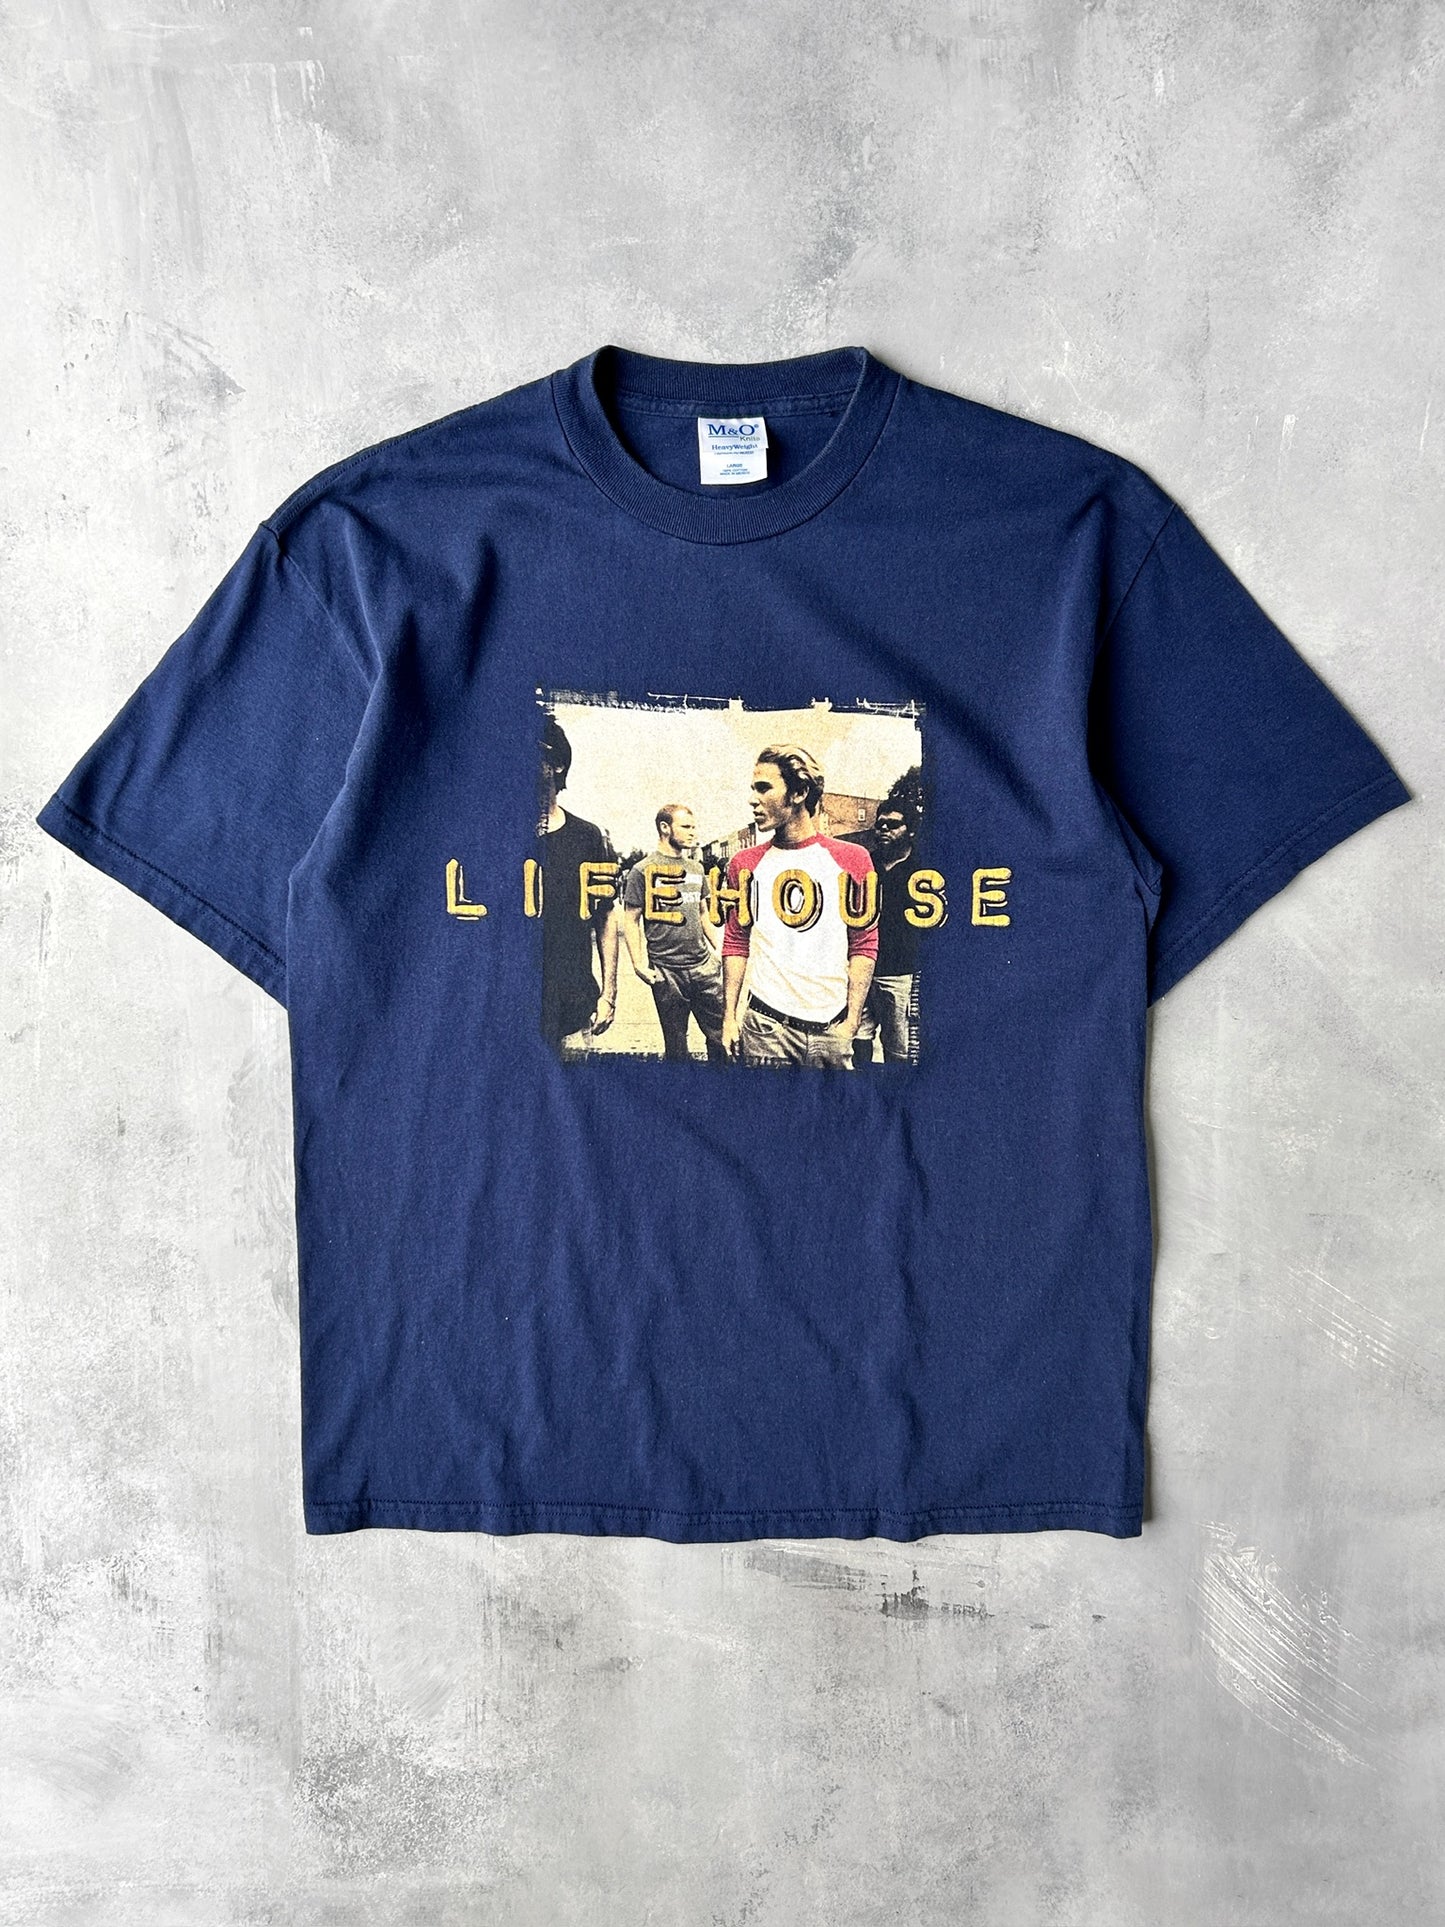 Lifehouse Tour T-Shirt '00 - Large